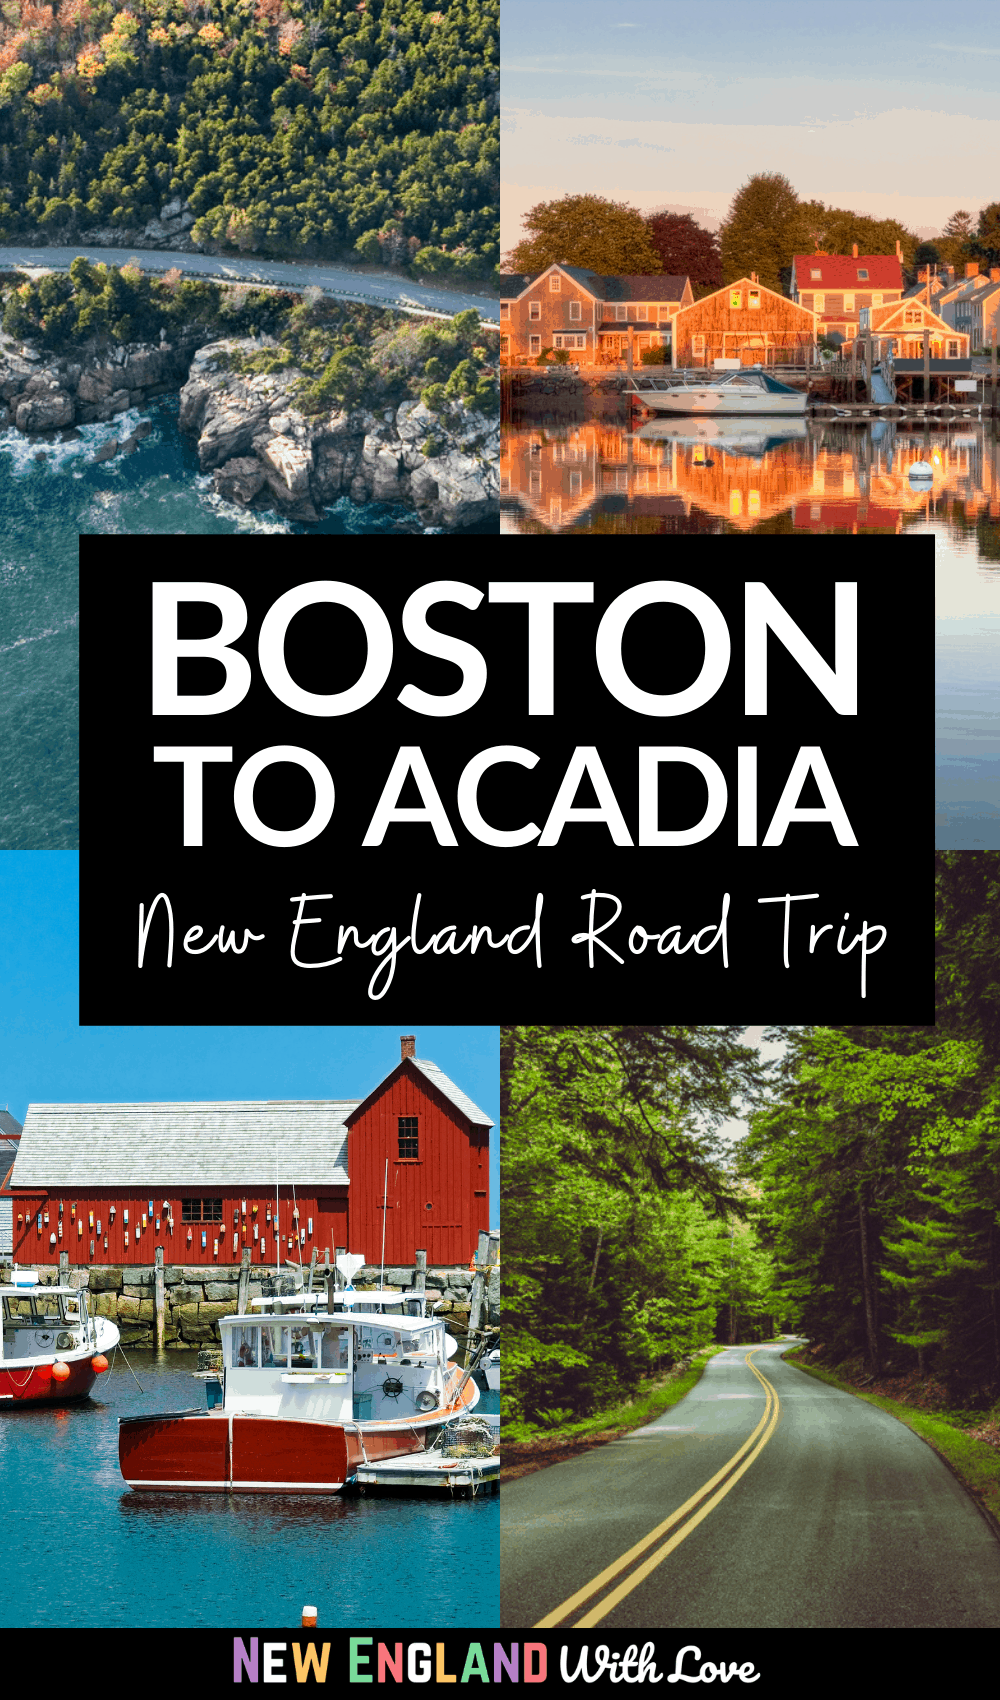 Pinterest graphic reading "BOSTON TO ACADIA New England Road Trip"